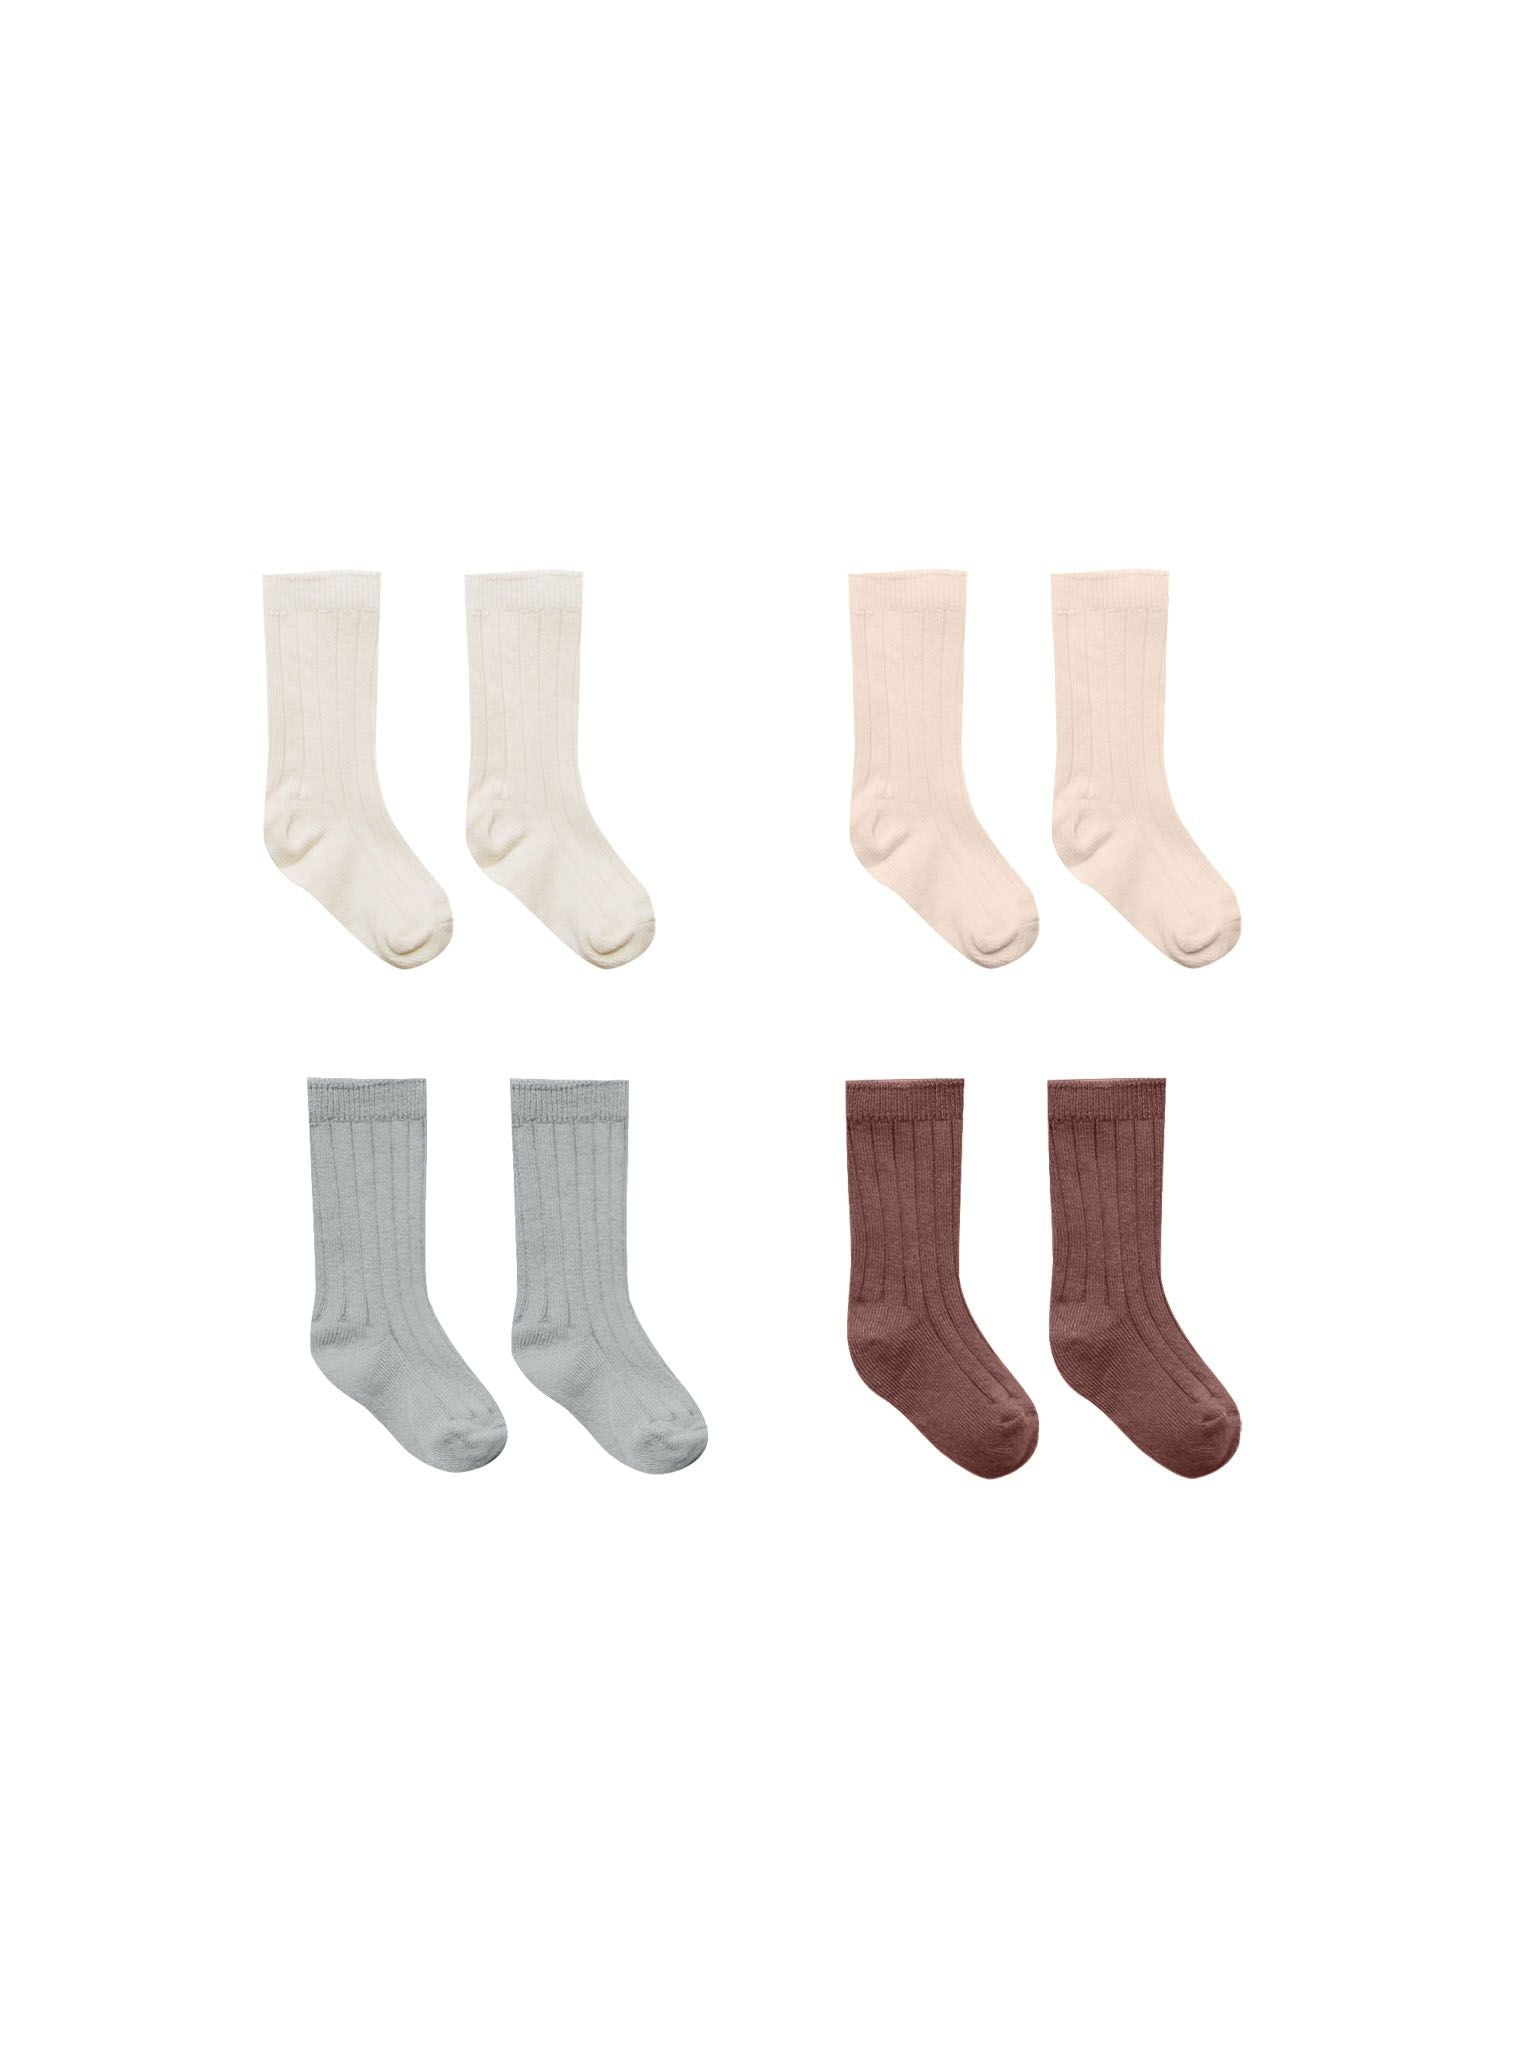 socks, set of 4 - ivory, shell, dusty blue, plum